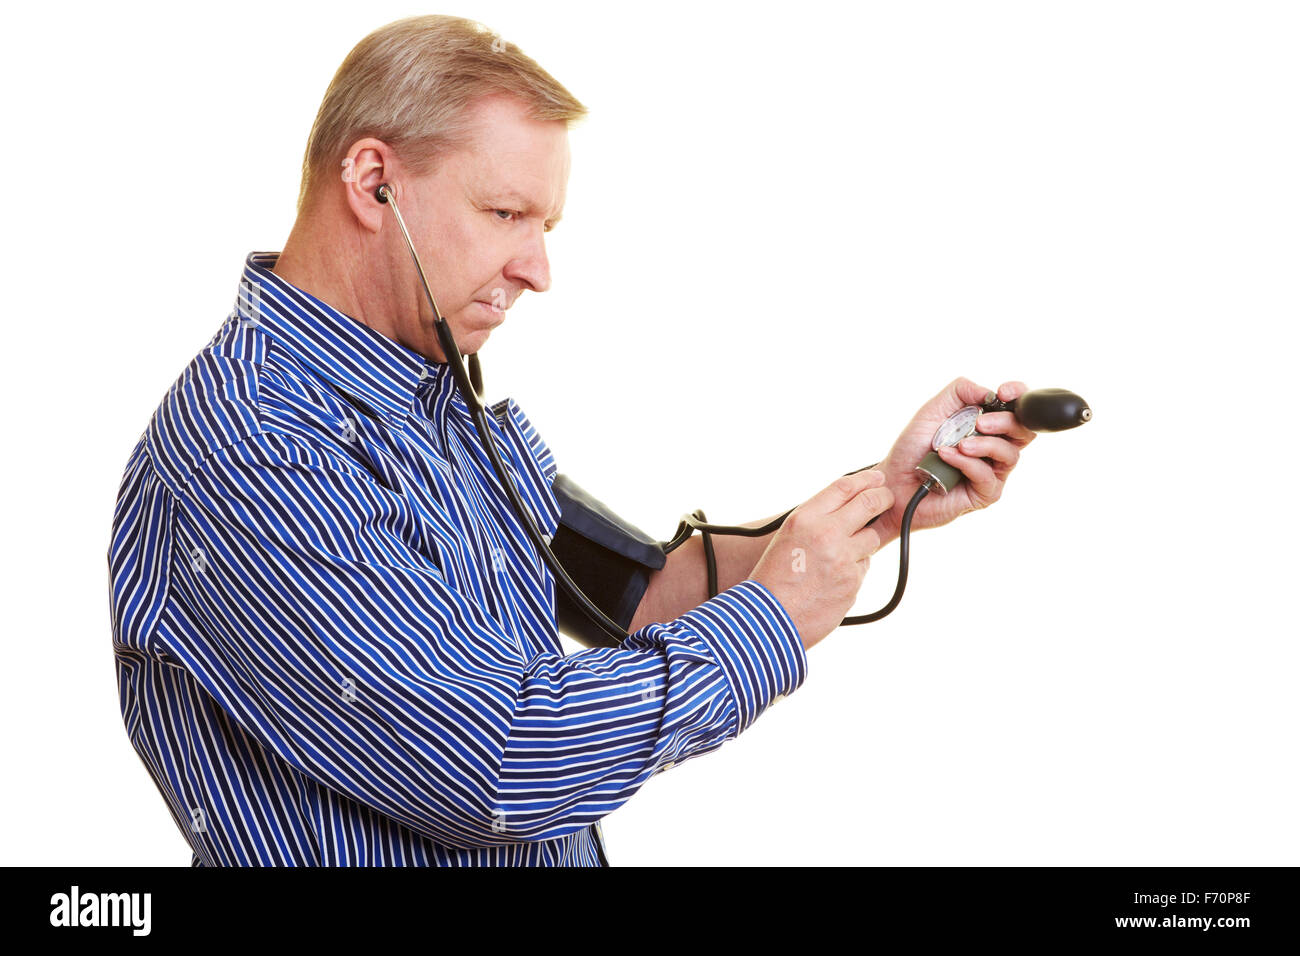 Elderly man measuring his own blood pressure Stock Photo